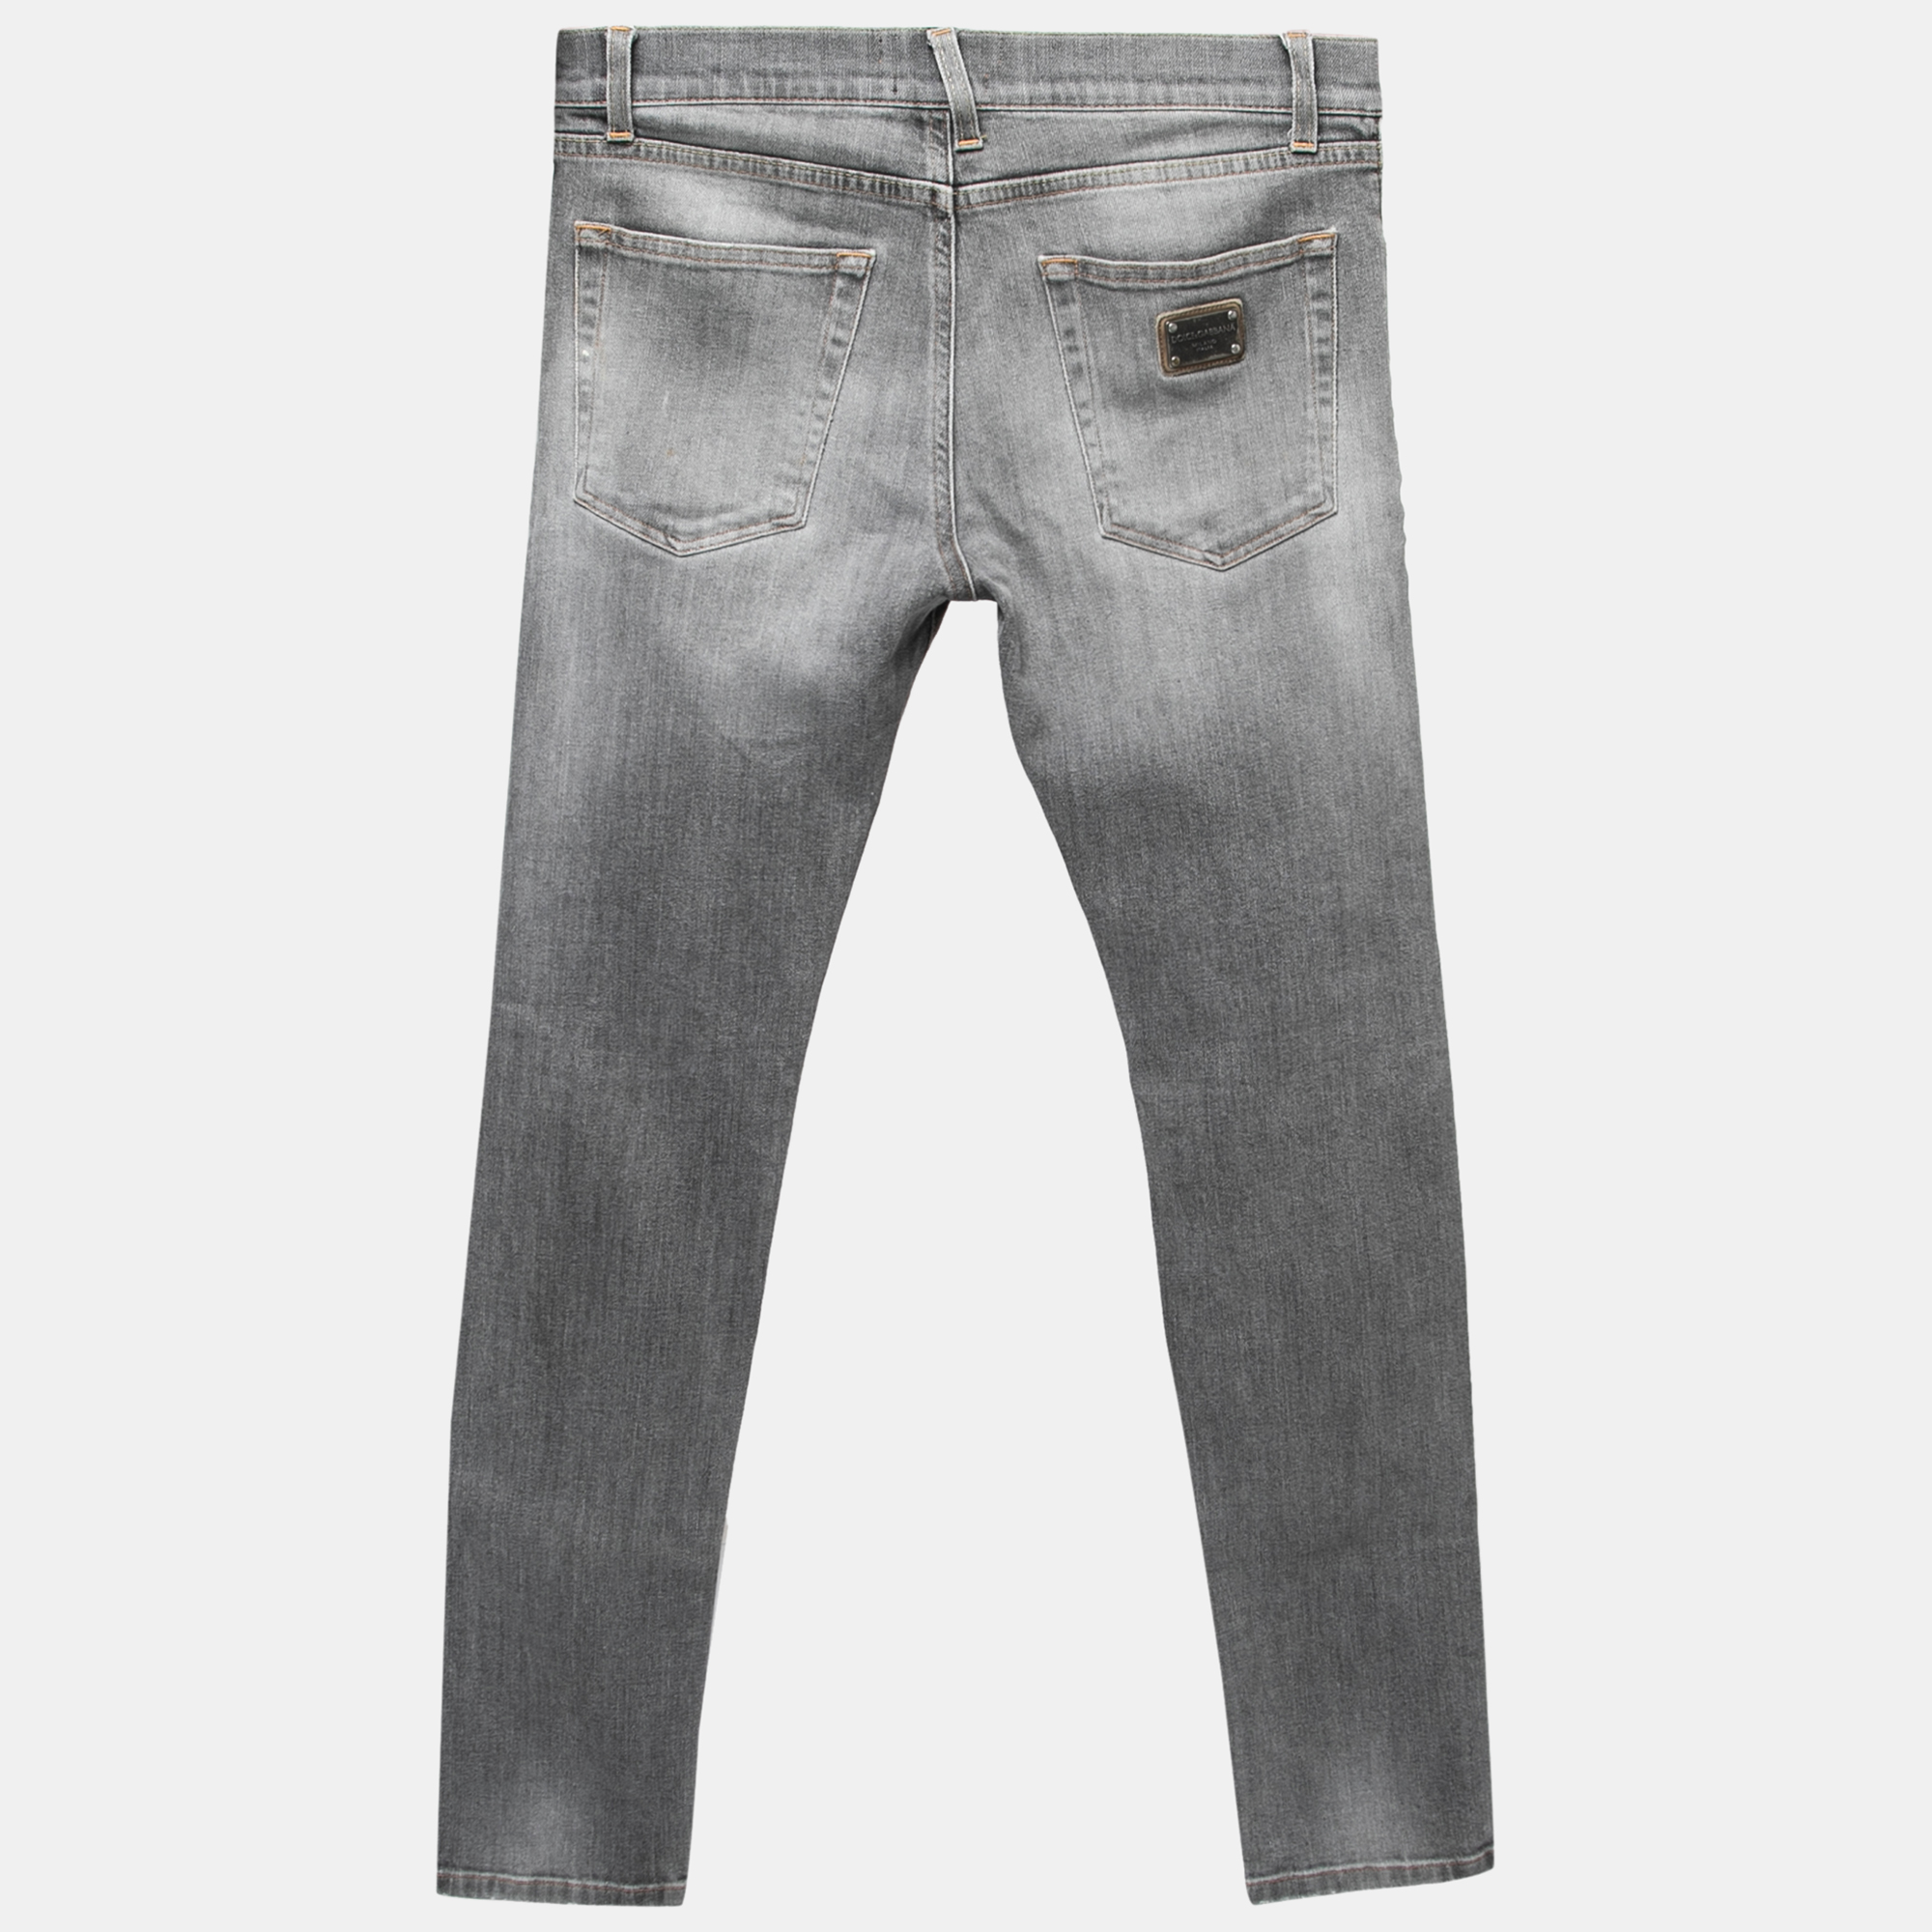 

Dolce & Gabbana Grey Denim Capri Slim Jeans  Waist 31